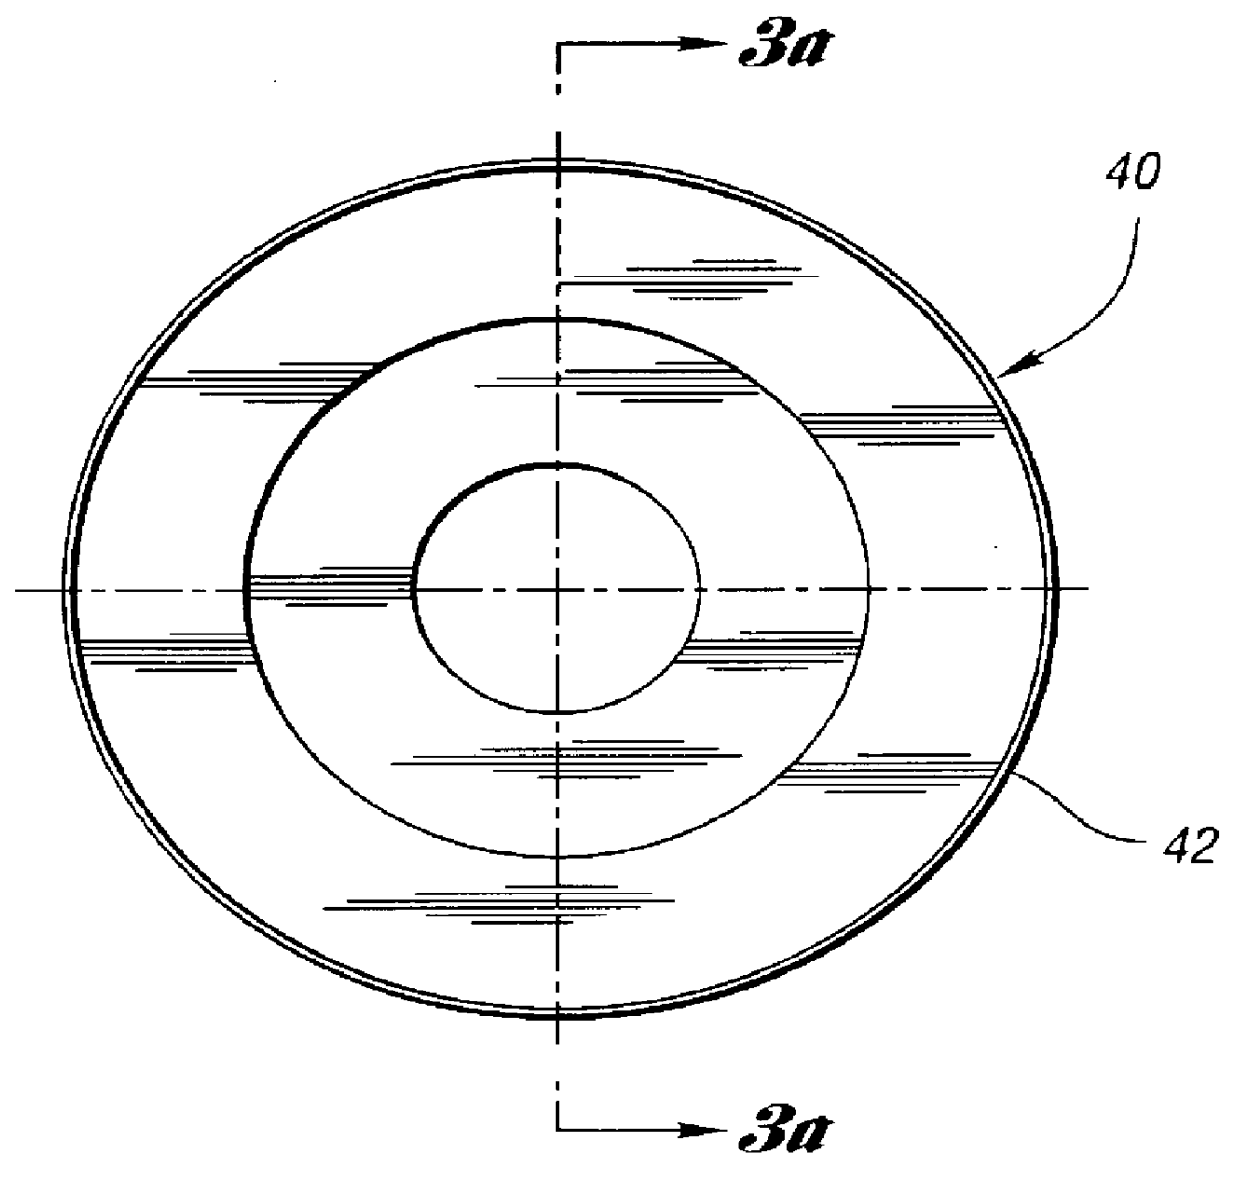 Ceramic radial flow turbine heat shield with turbine tip seal